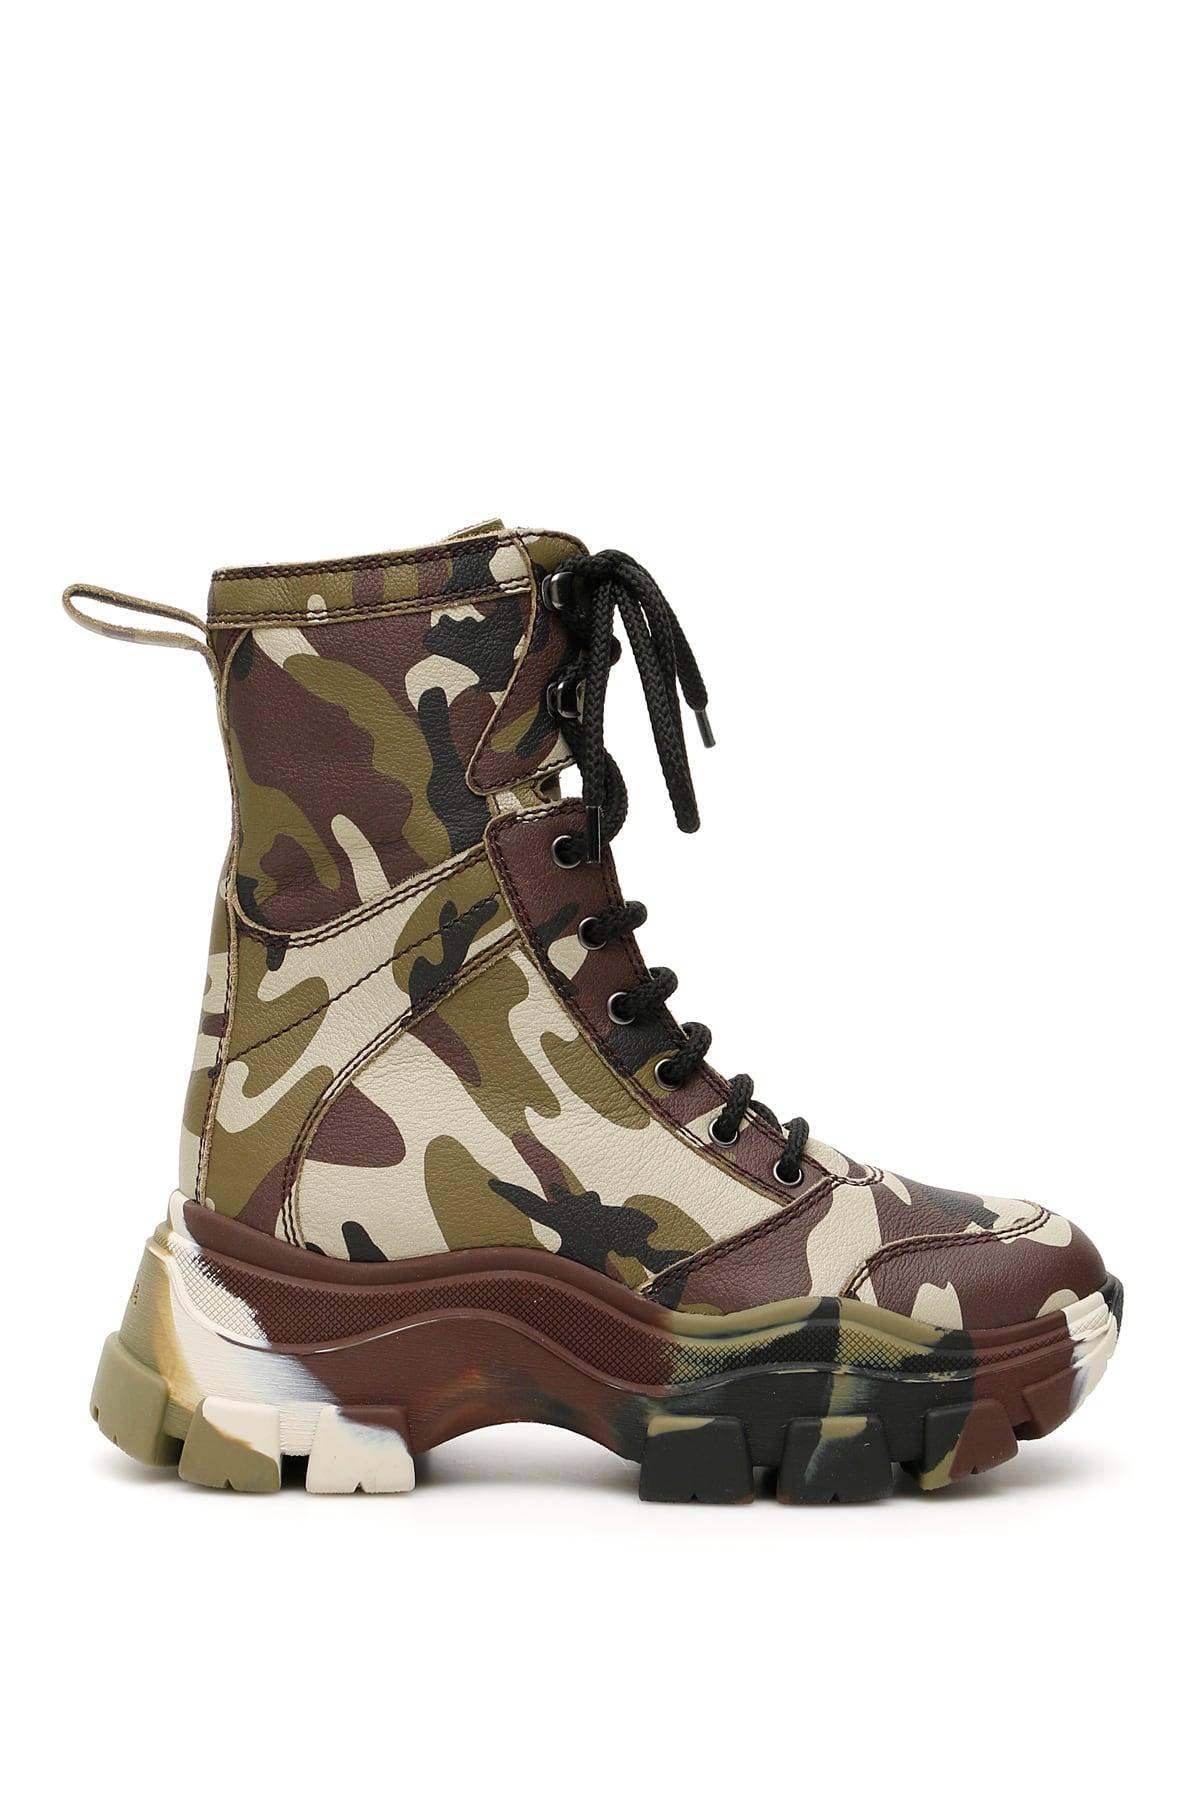 وسام أشير محبوب prada camouflage boots 